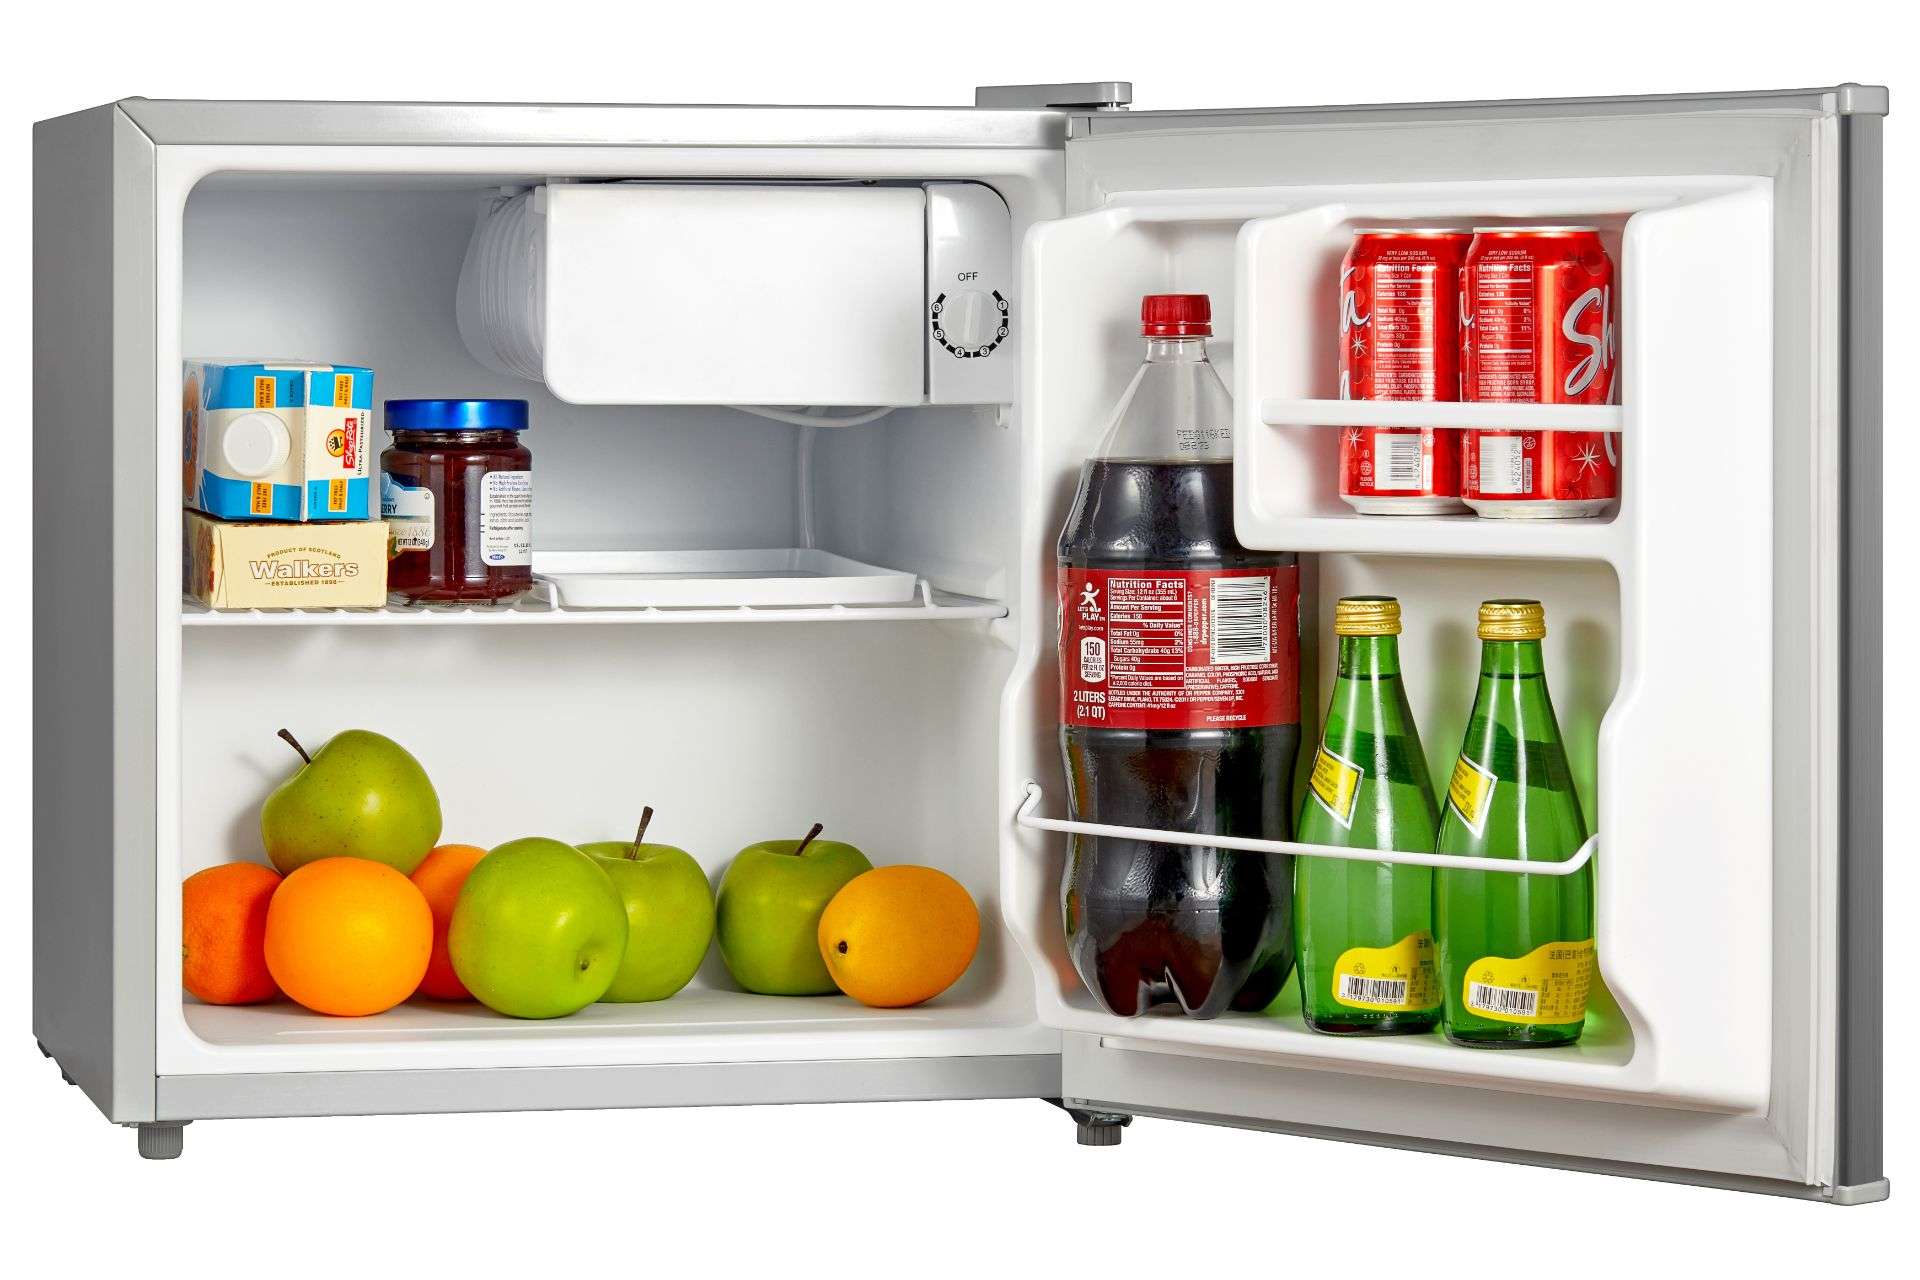 Buy Midea 45 L Mini Bar Refrigerator online in India